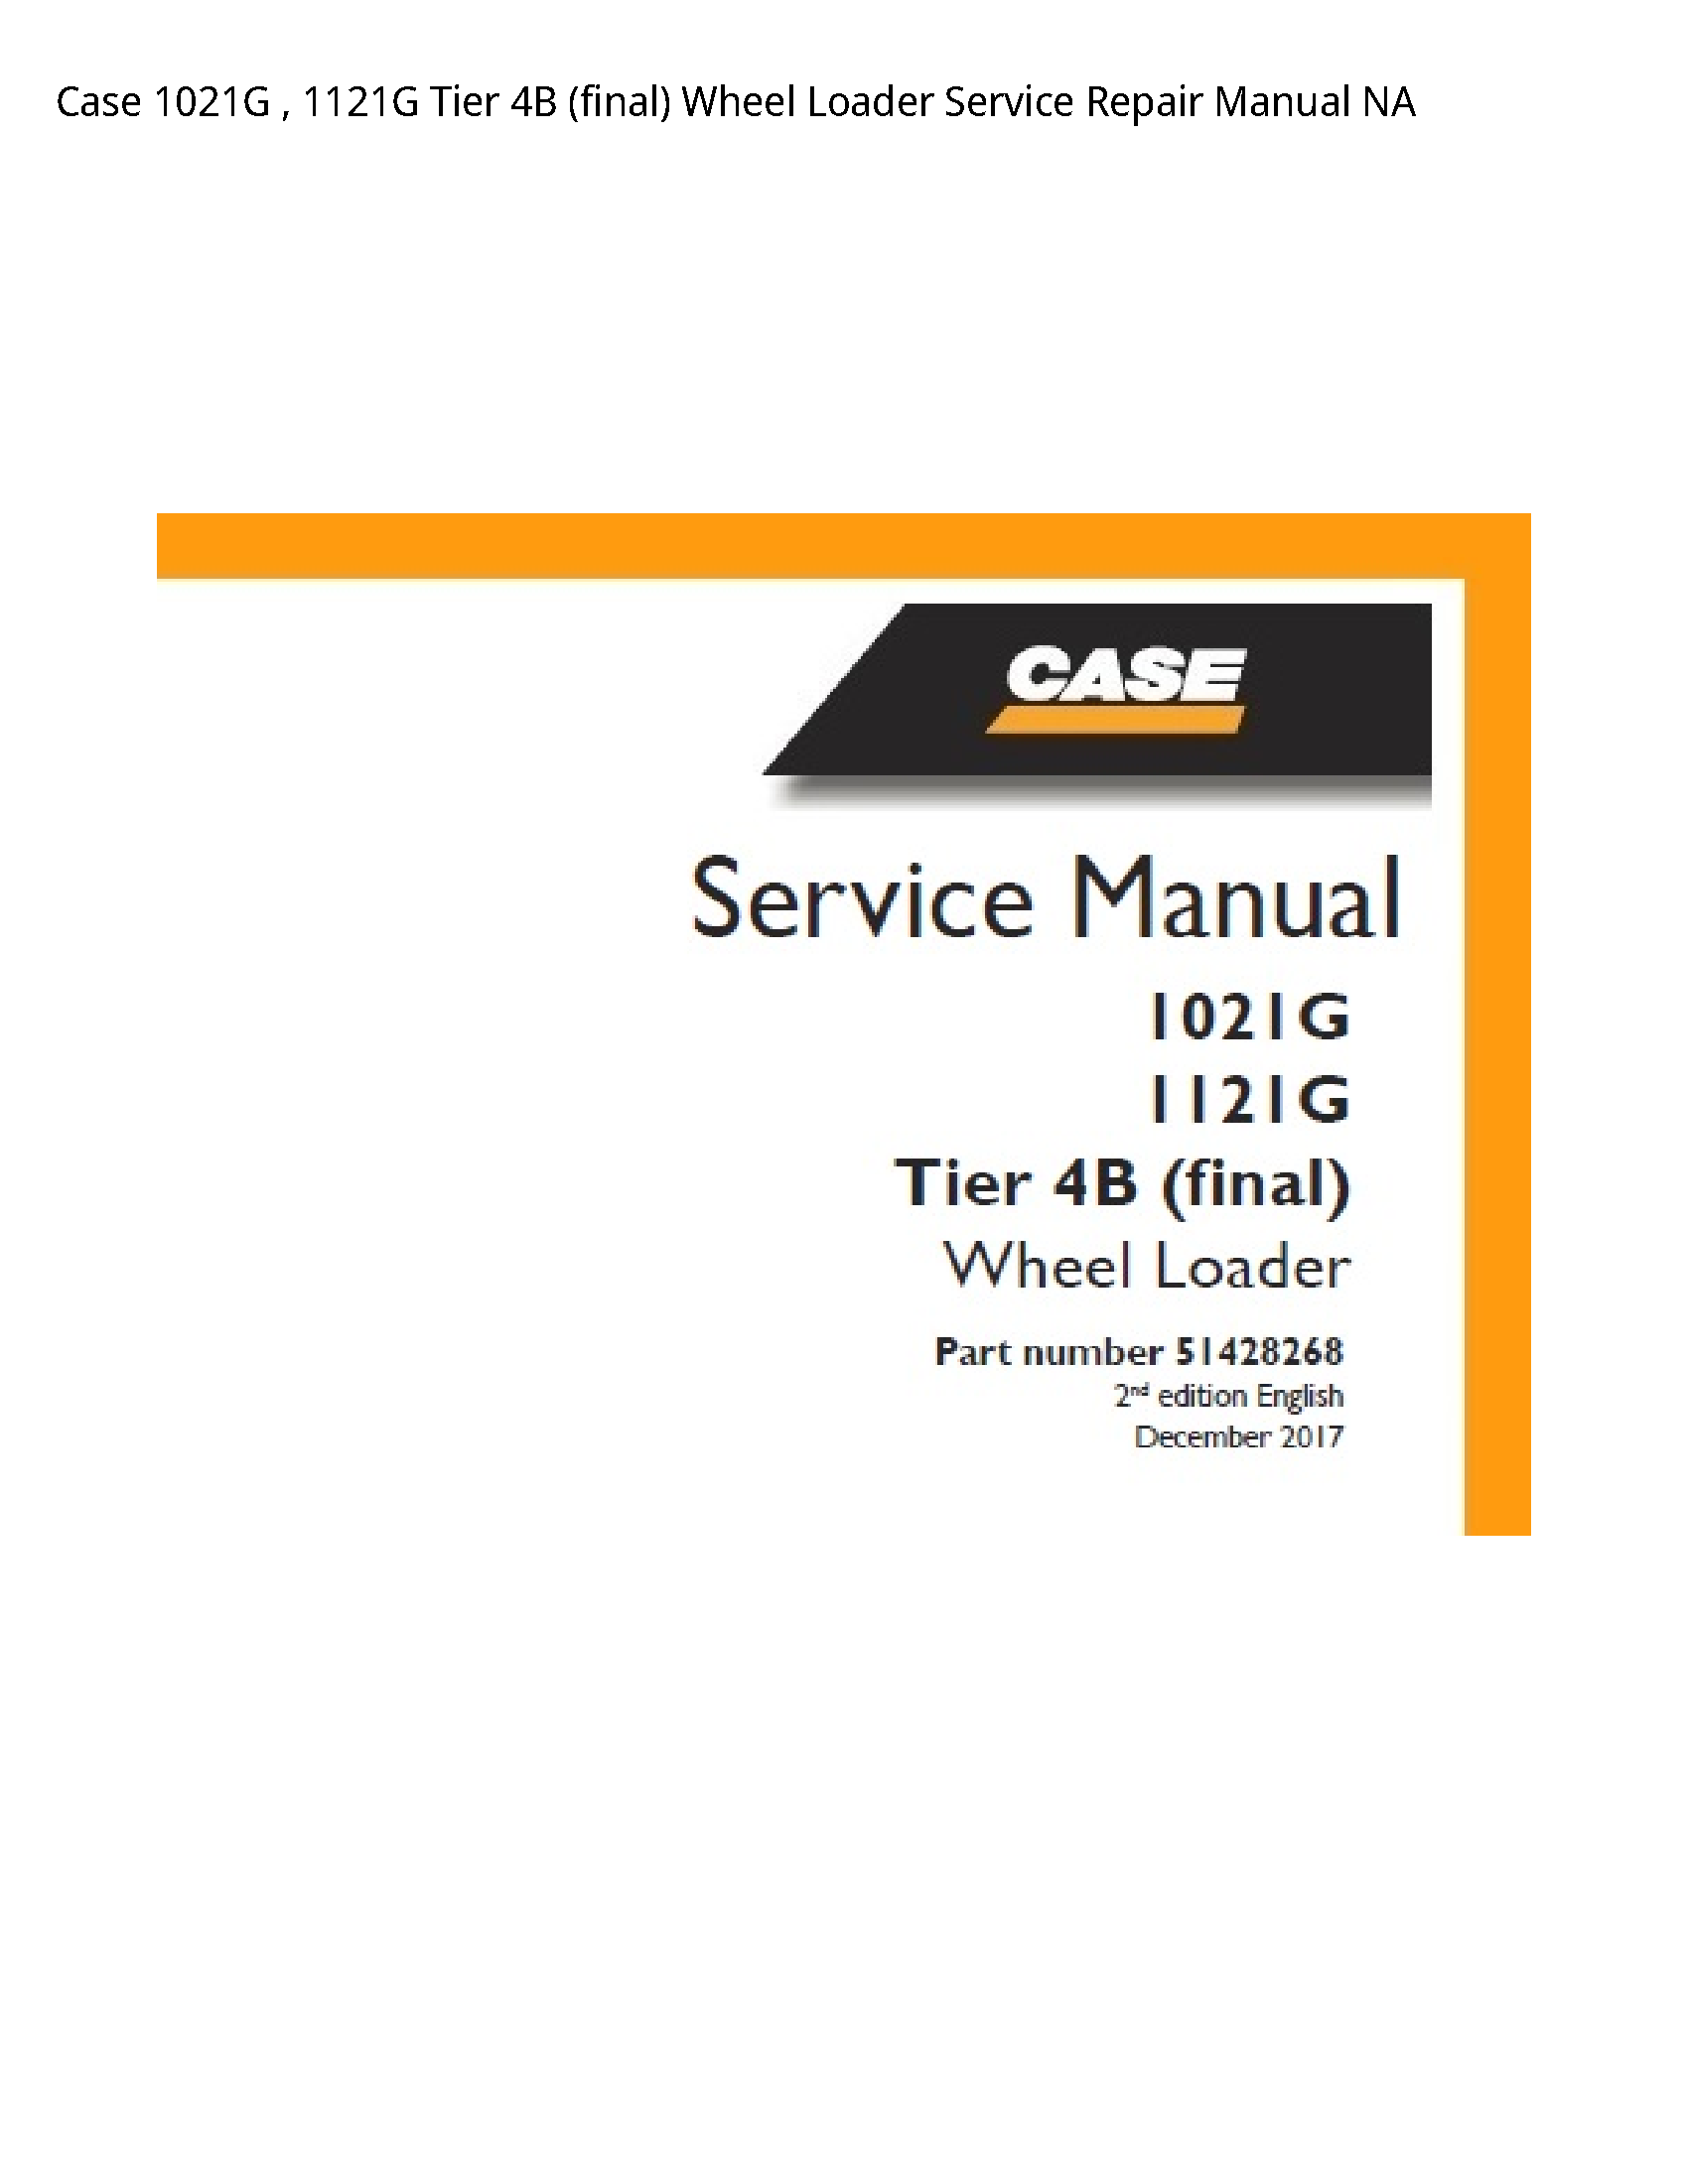 Case/Case IH 1021G Tier (final) Wheel Loader manual